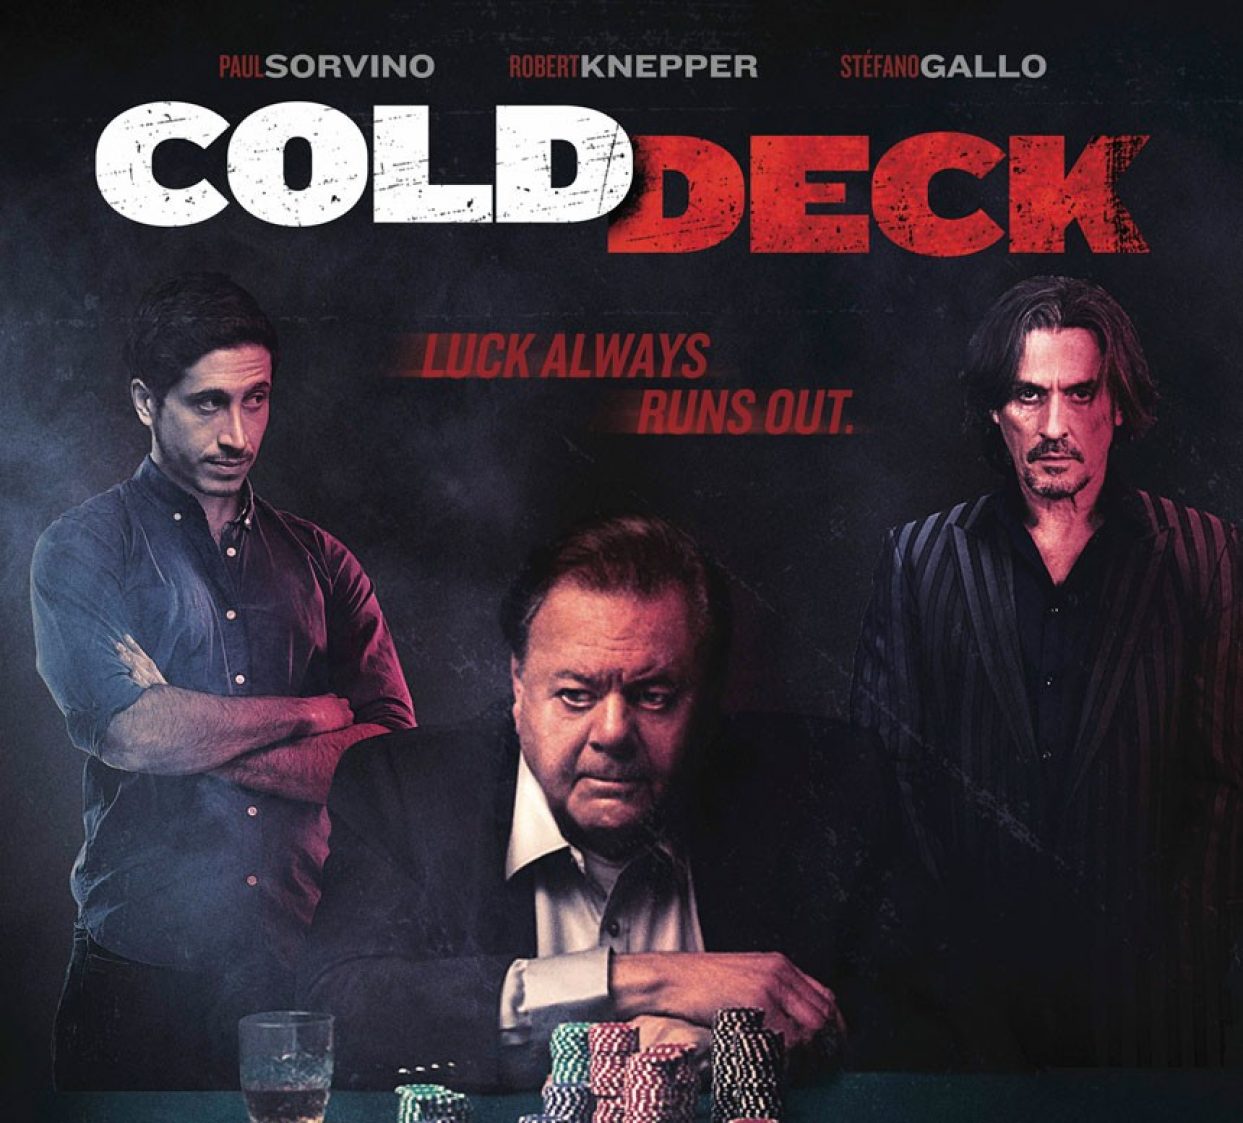 Cold Deck (2015)